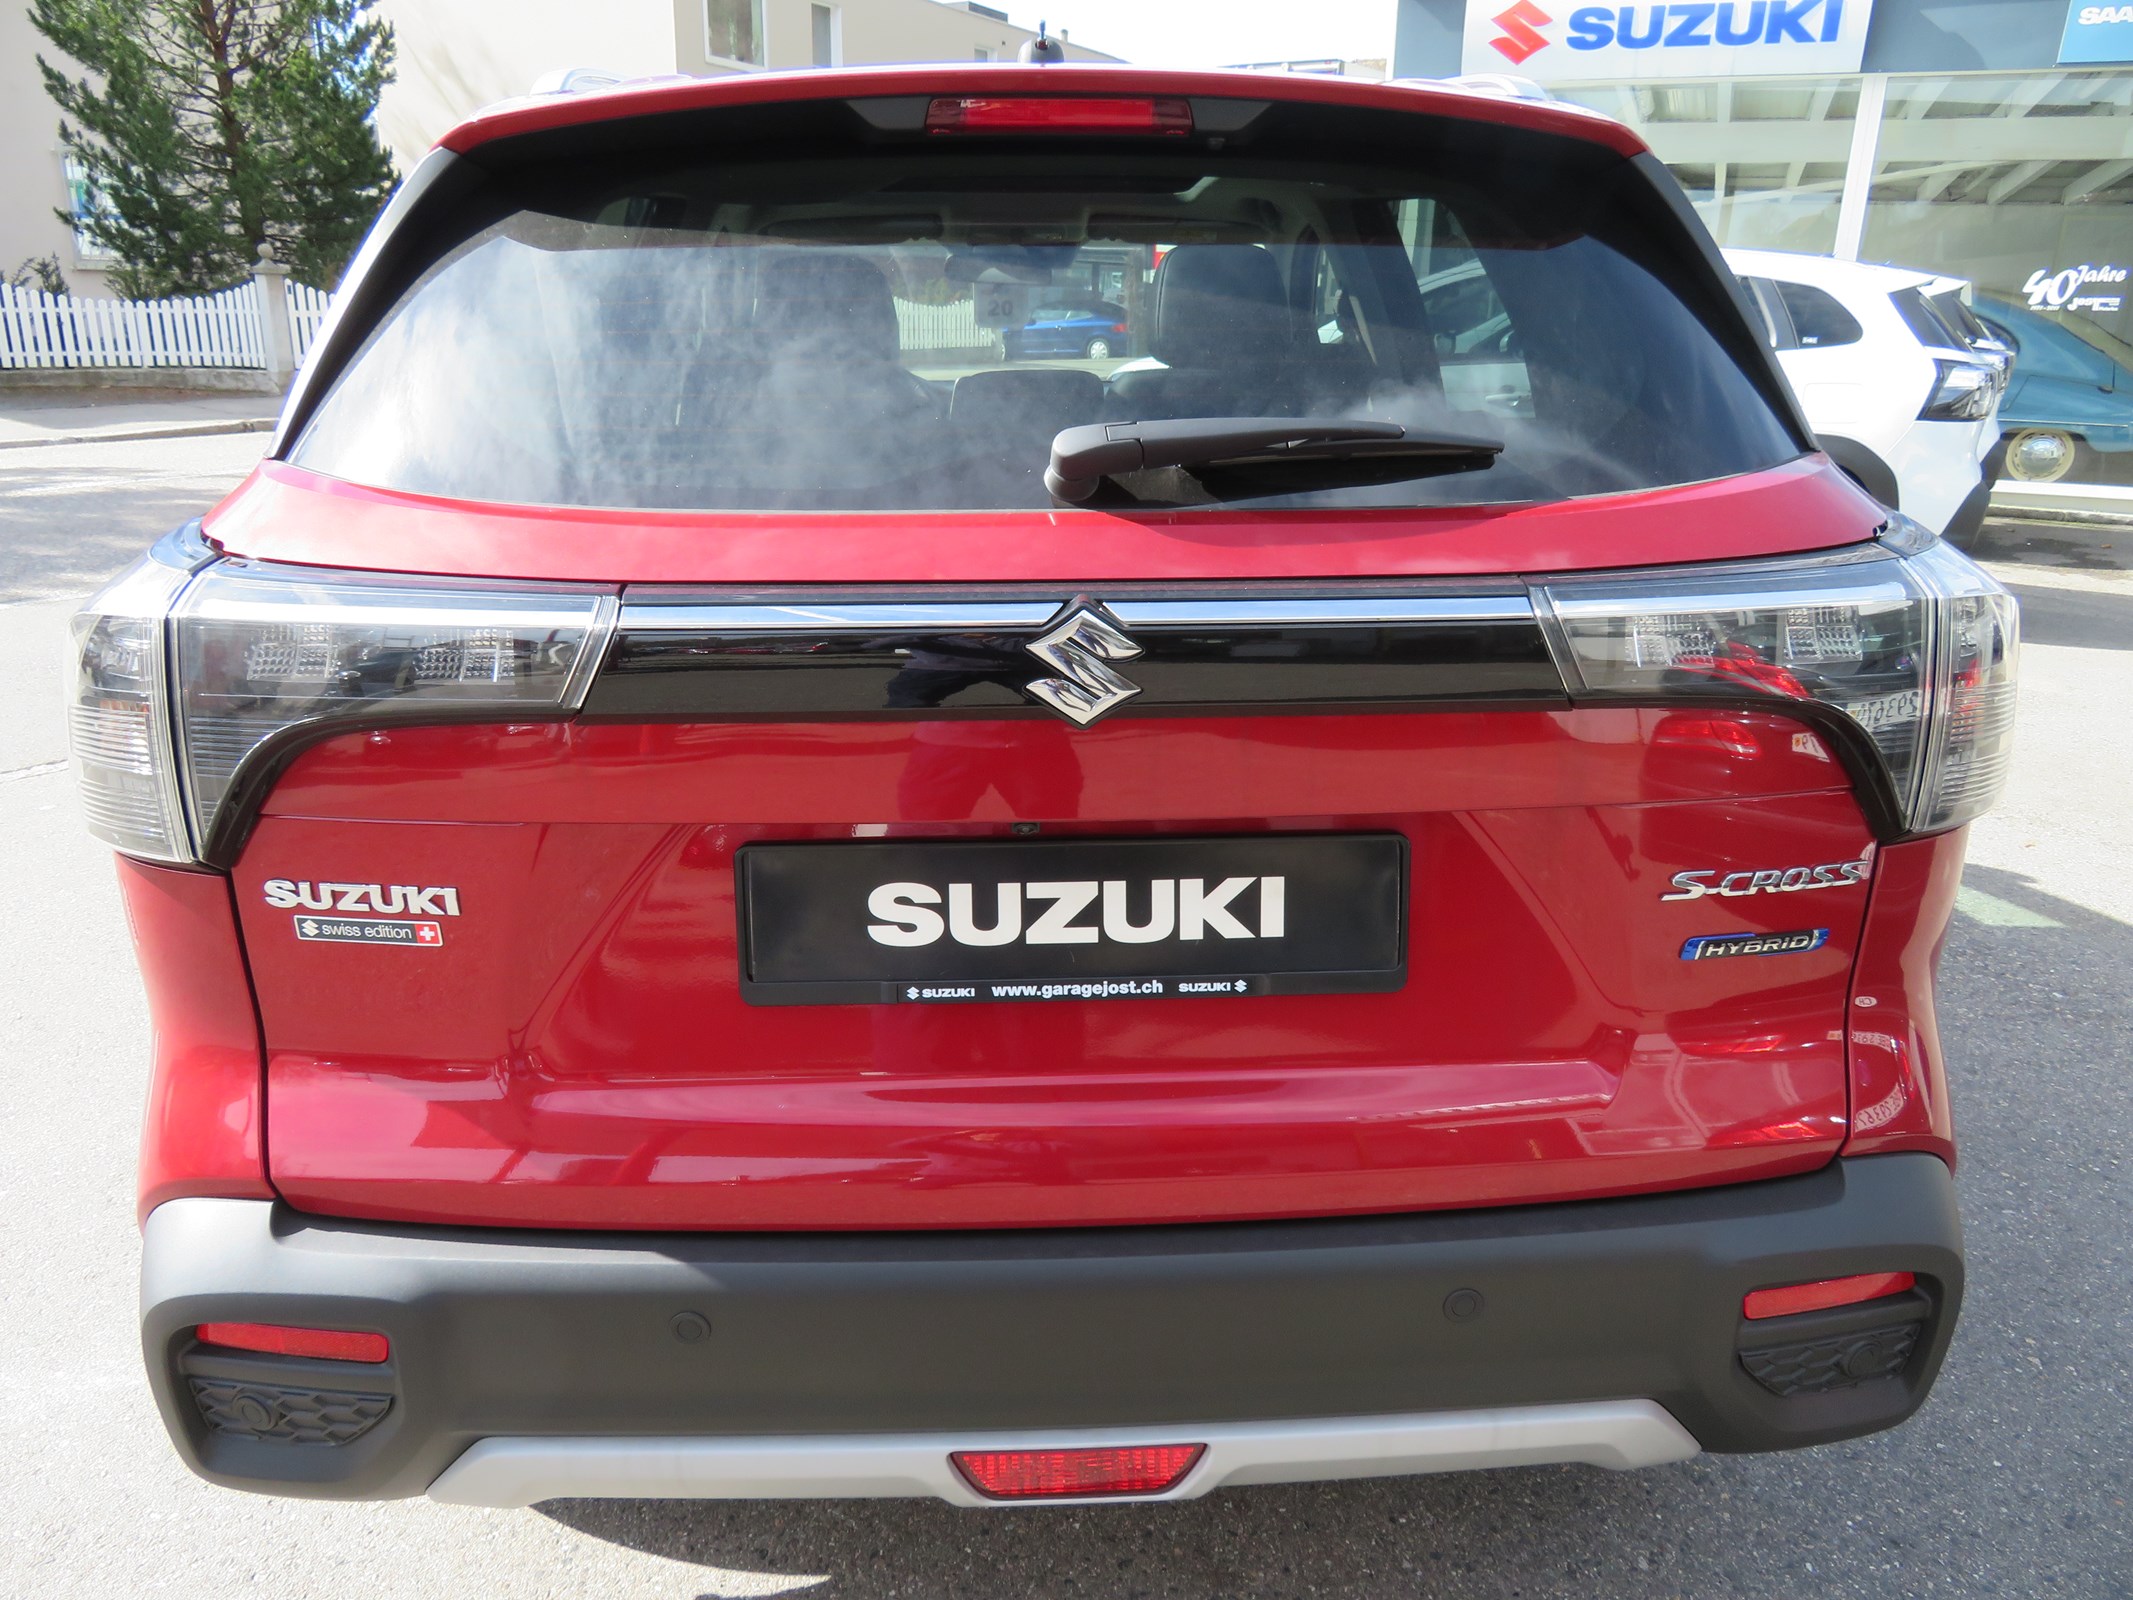 SUZUKI S-Cross 1.5 Compact Top Hybrid